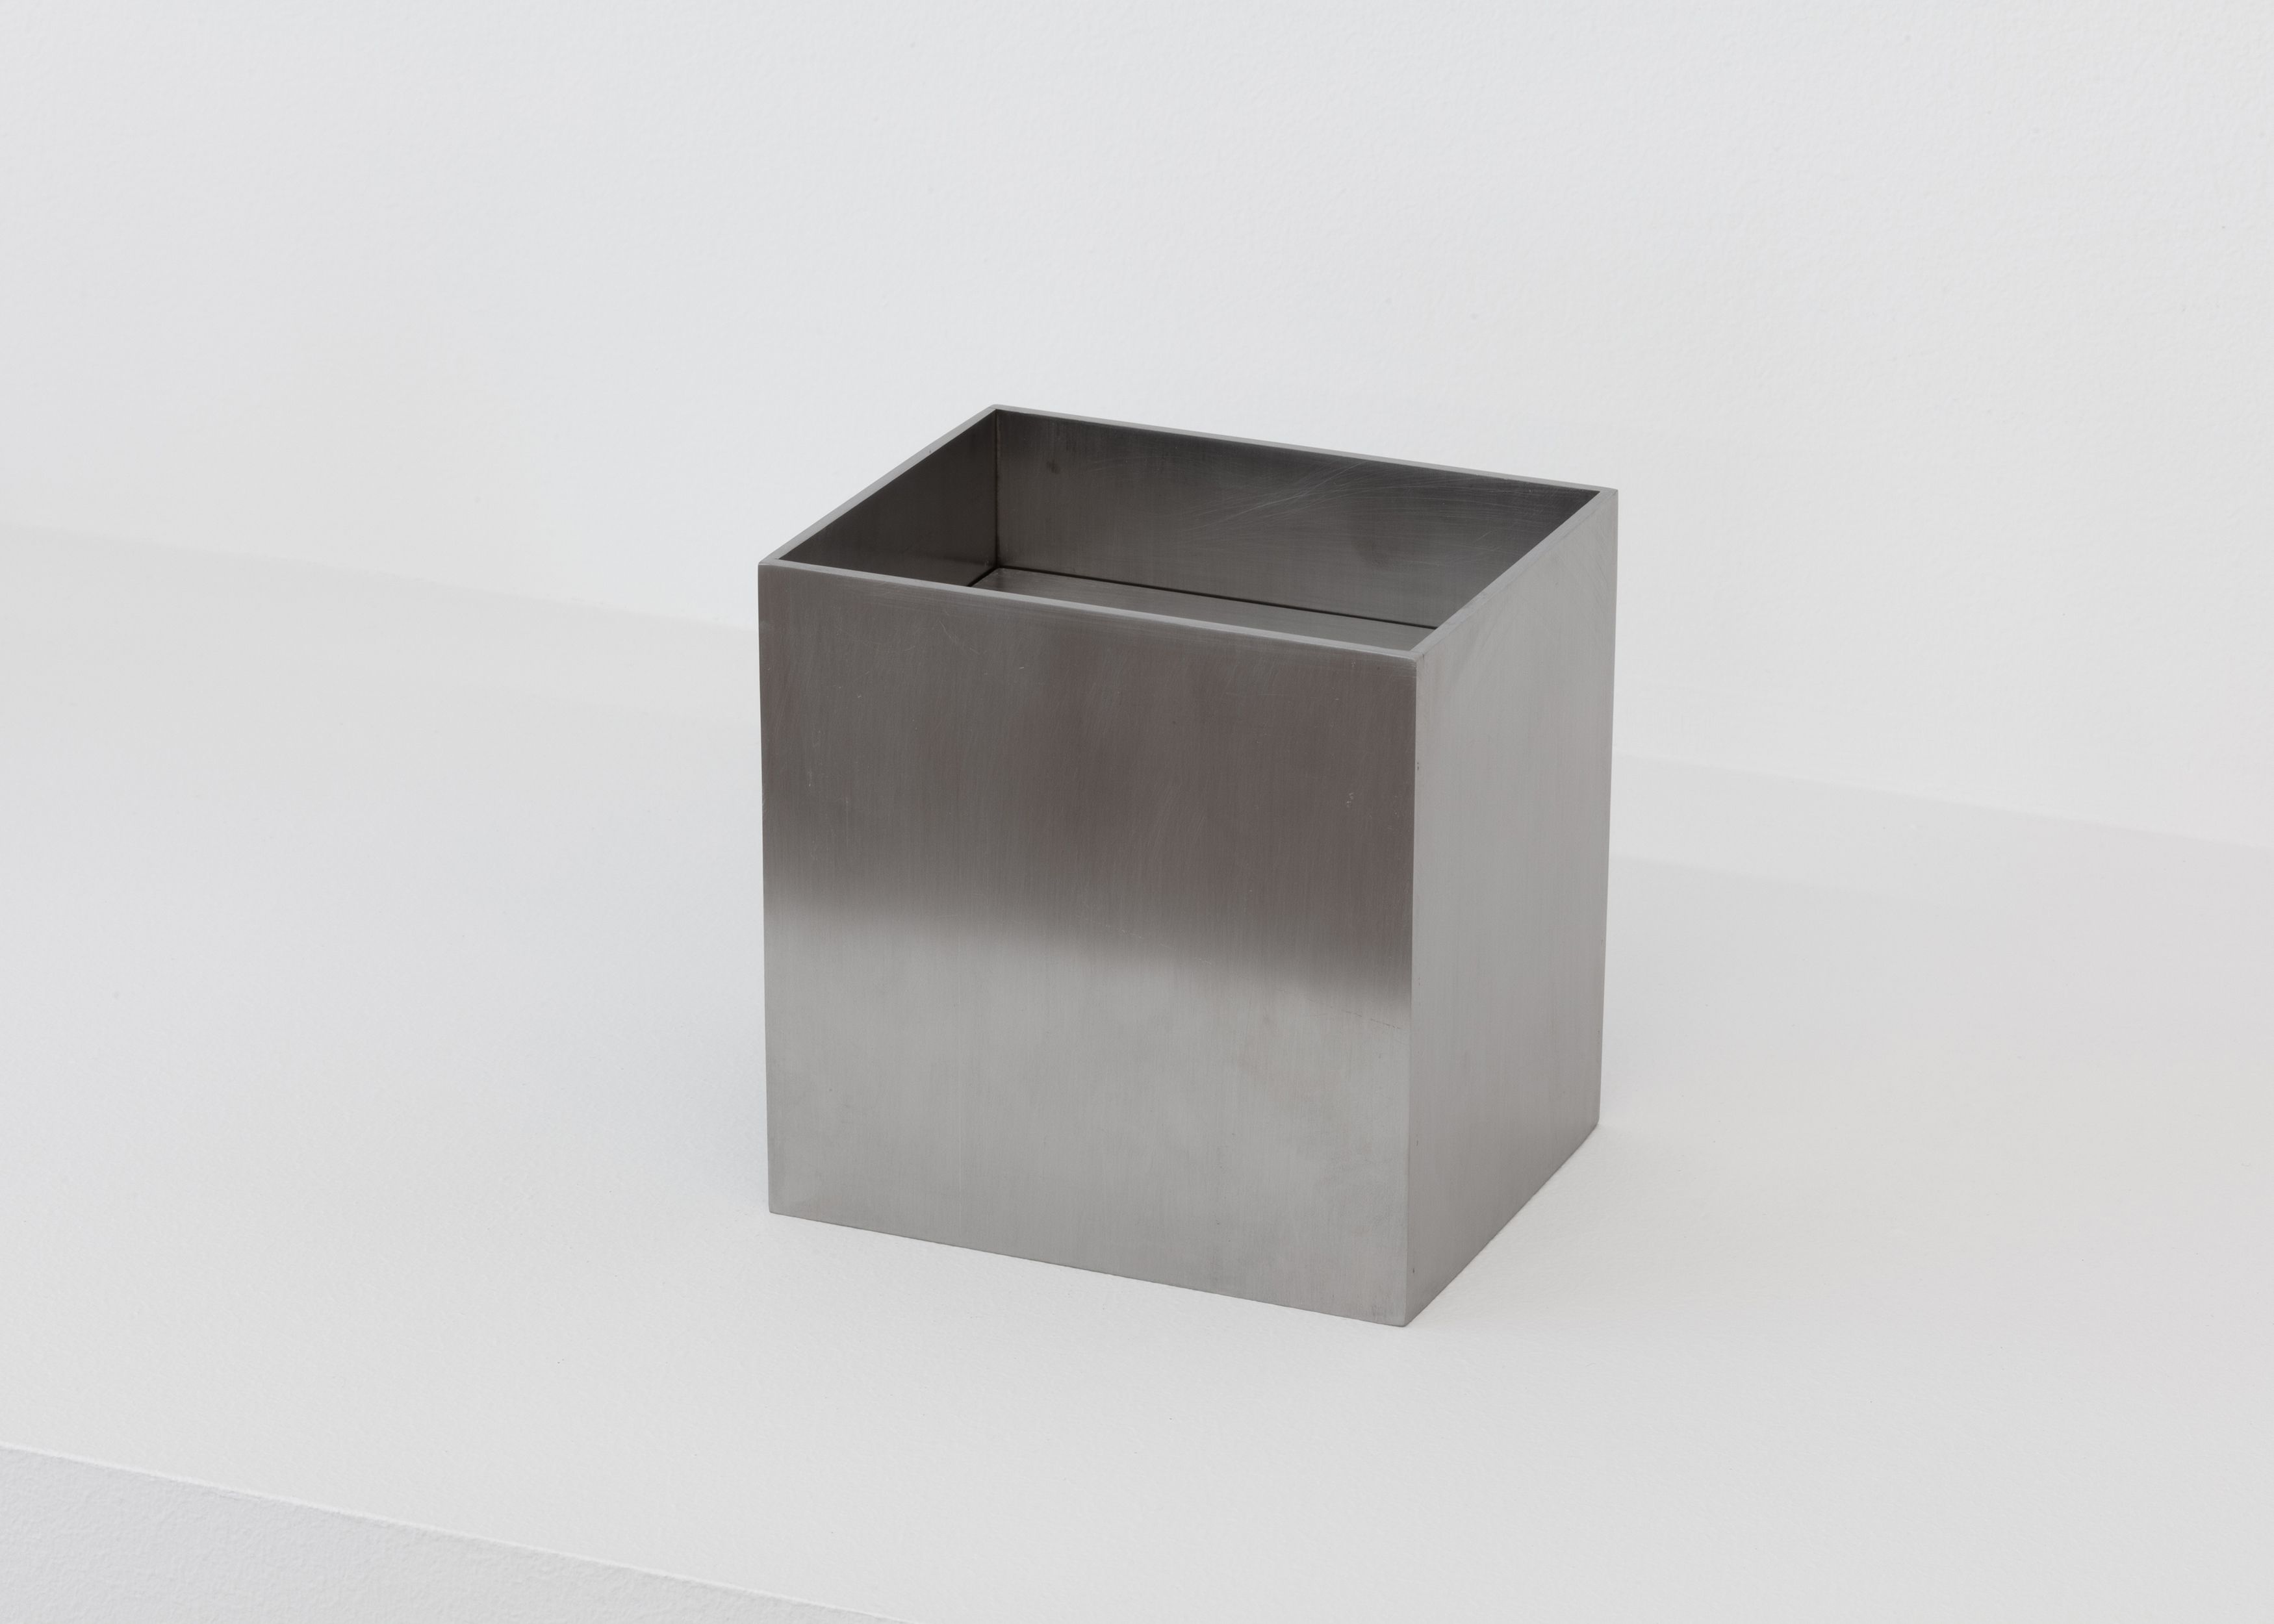 Stephen Lichty, Form 5, 2021, stainless steel, 4 x 4 x 3 in. (10.16 x 10.16 x 7.62 cm)